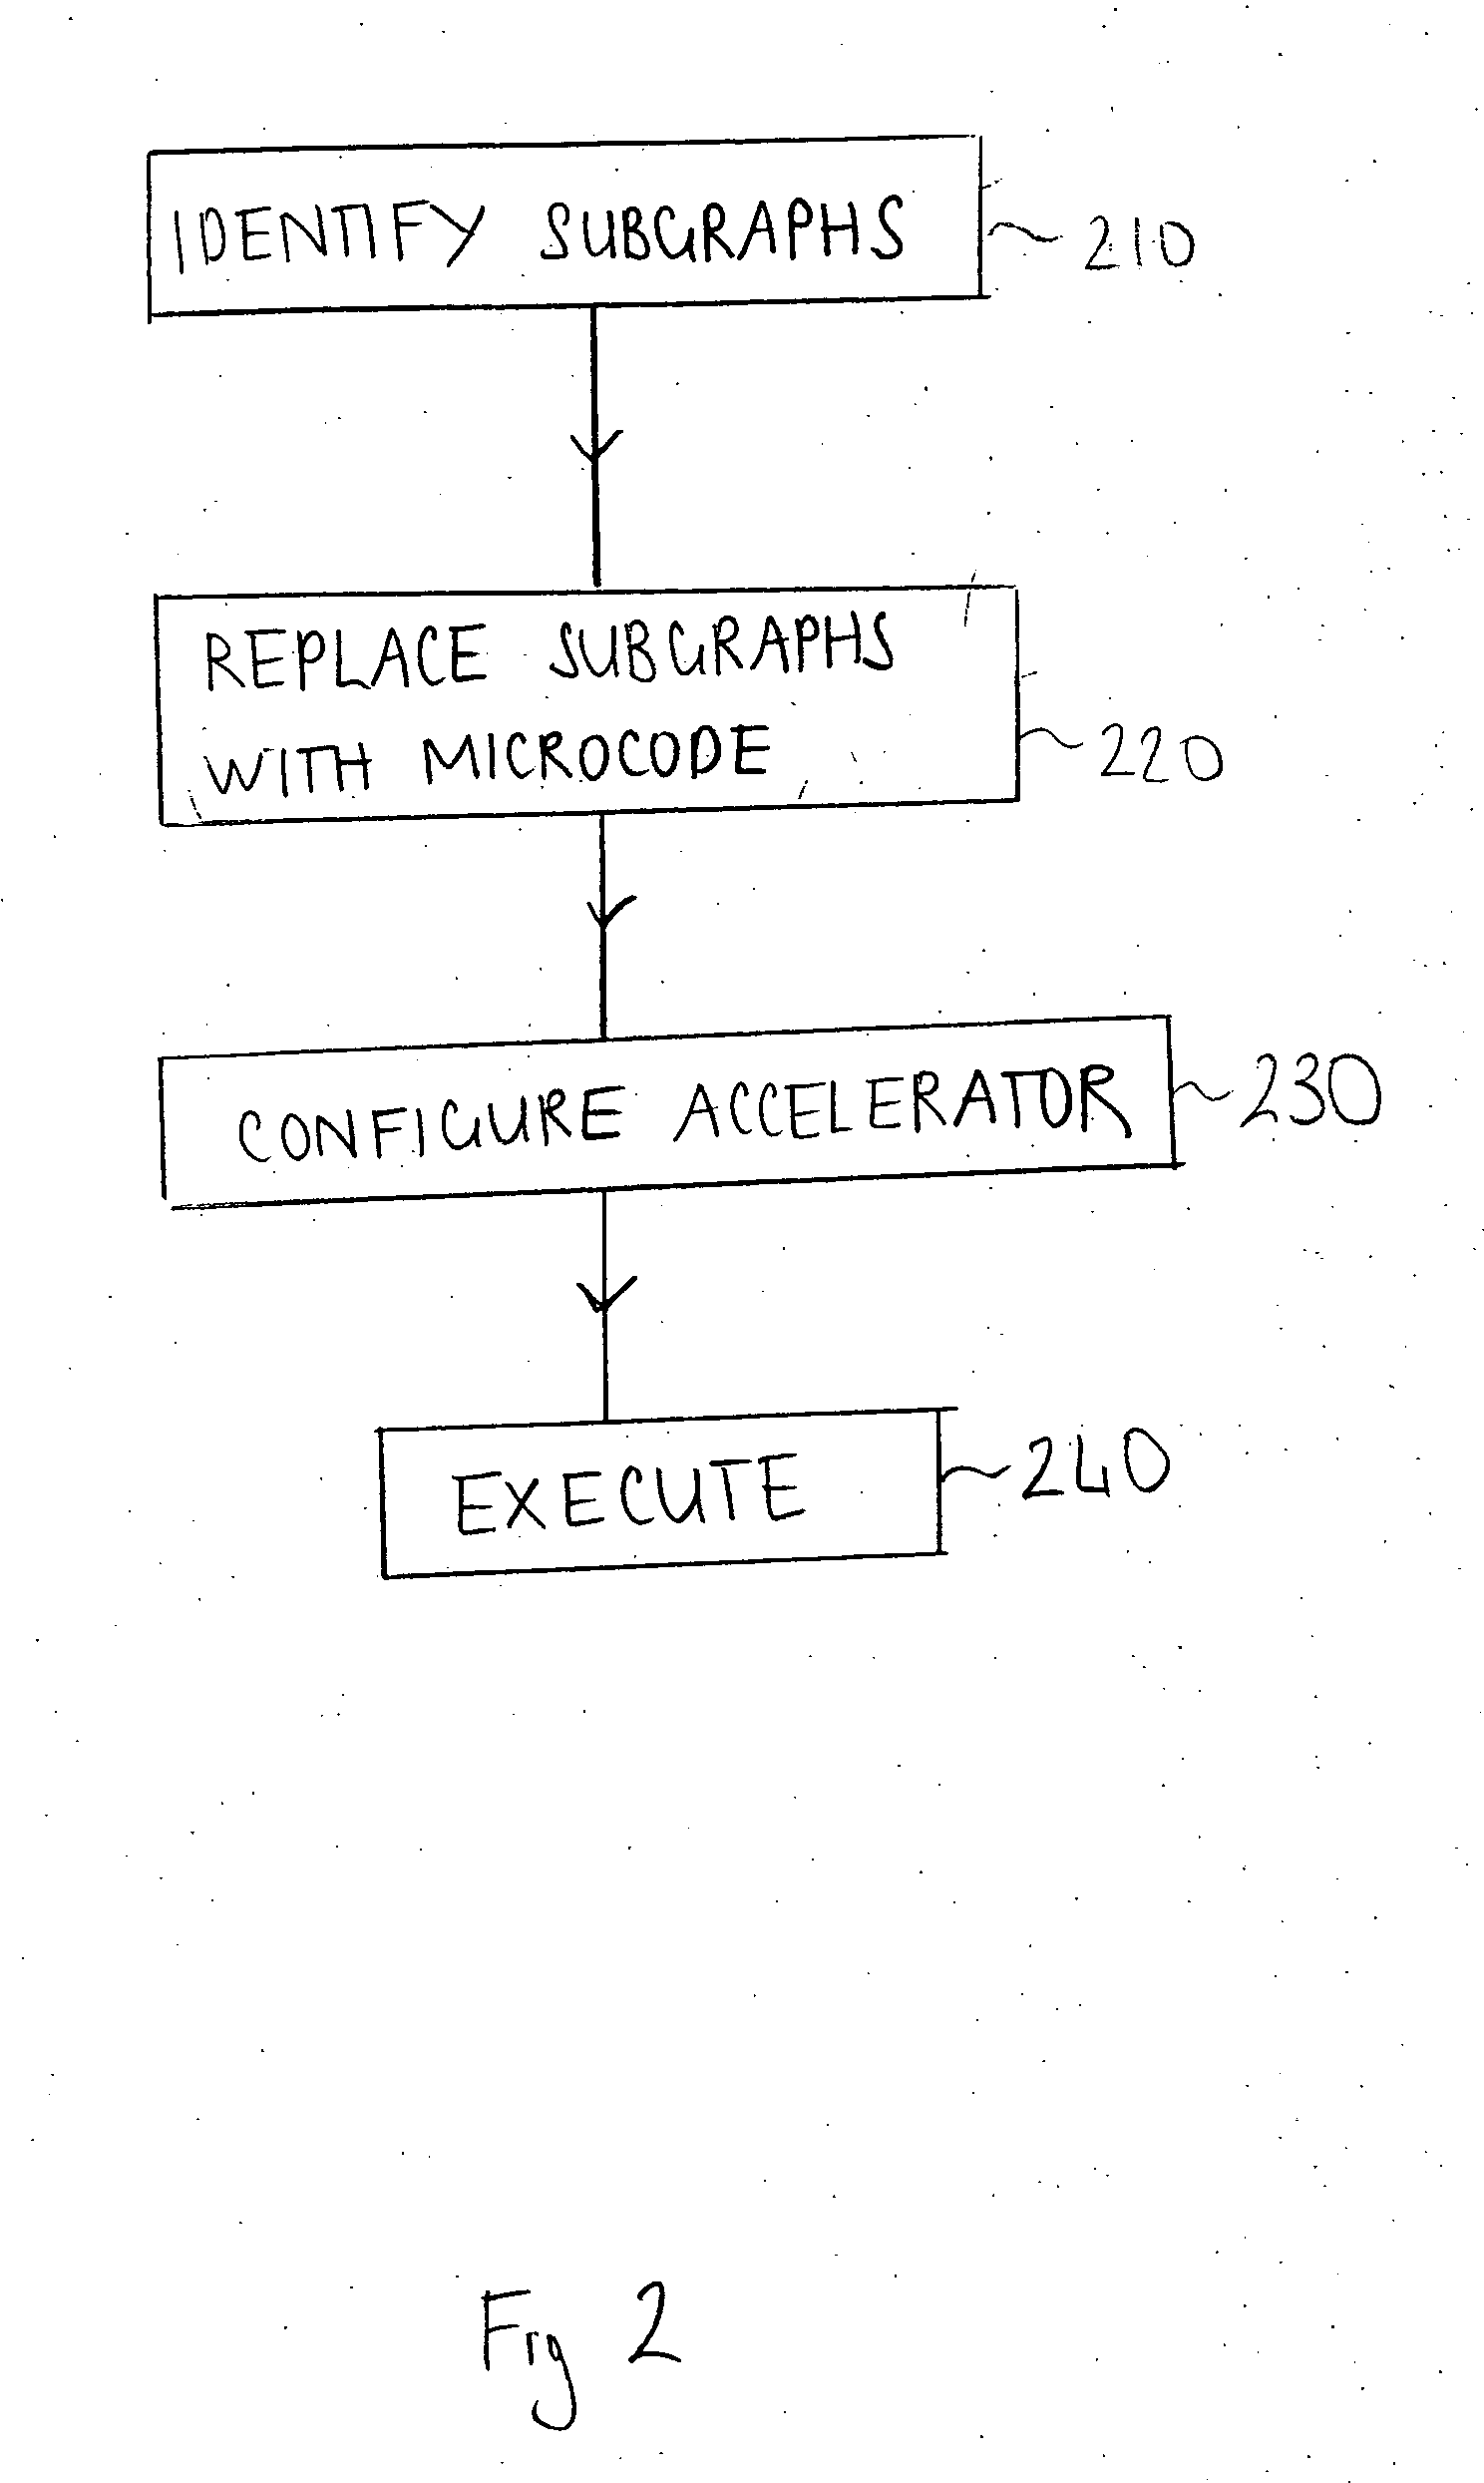 Reuseable configuration data